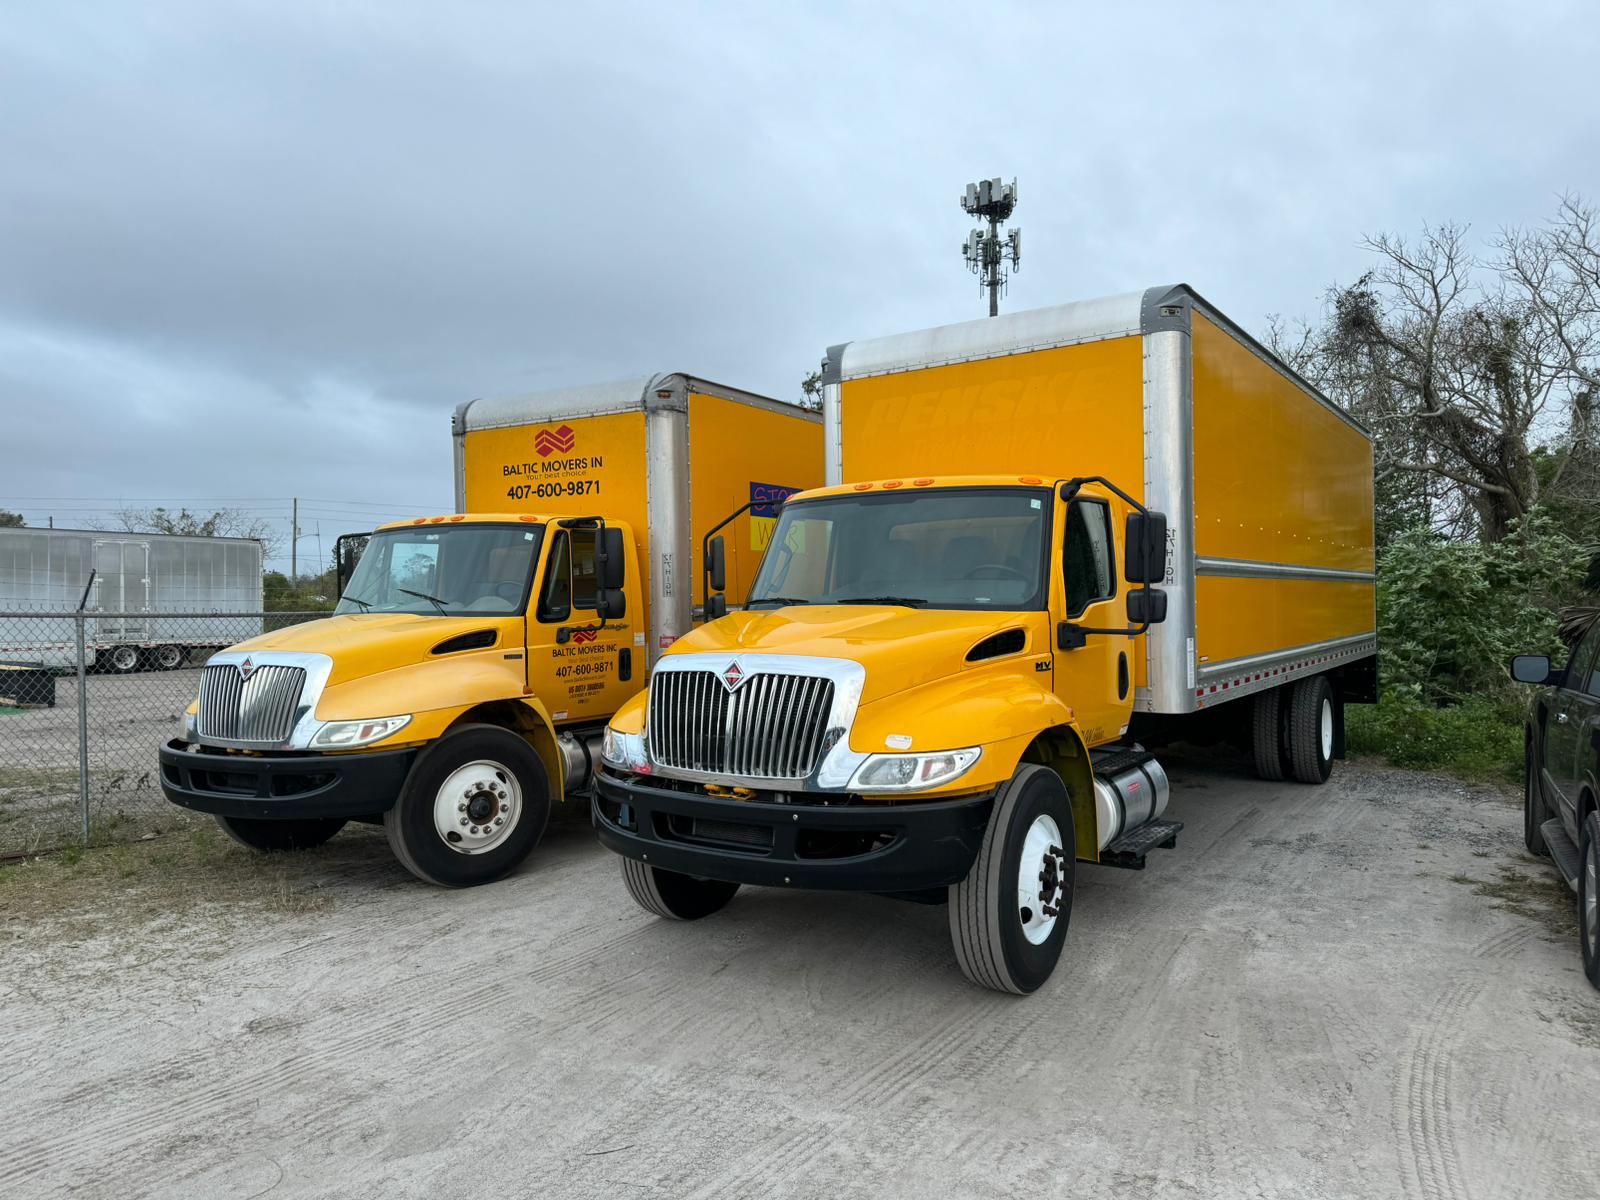 movers trucks florida